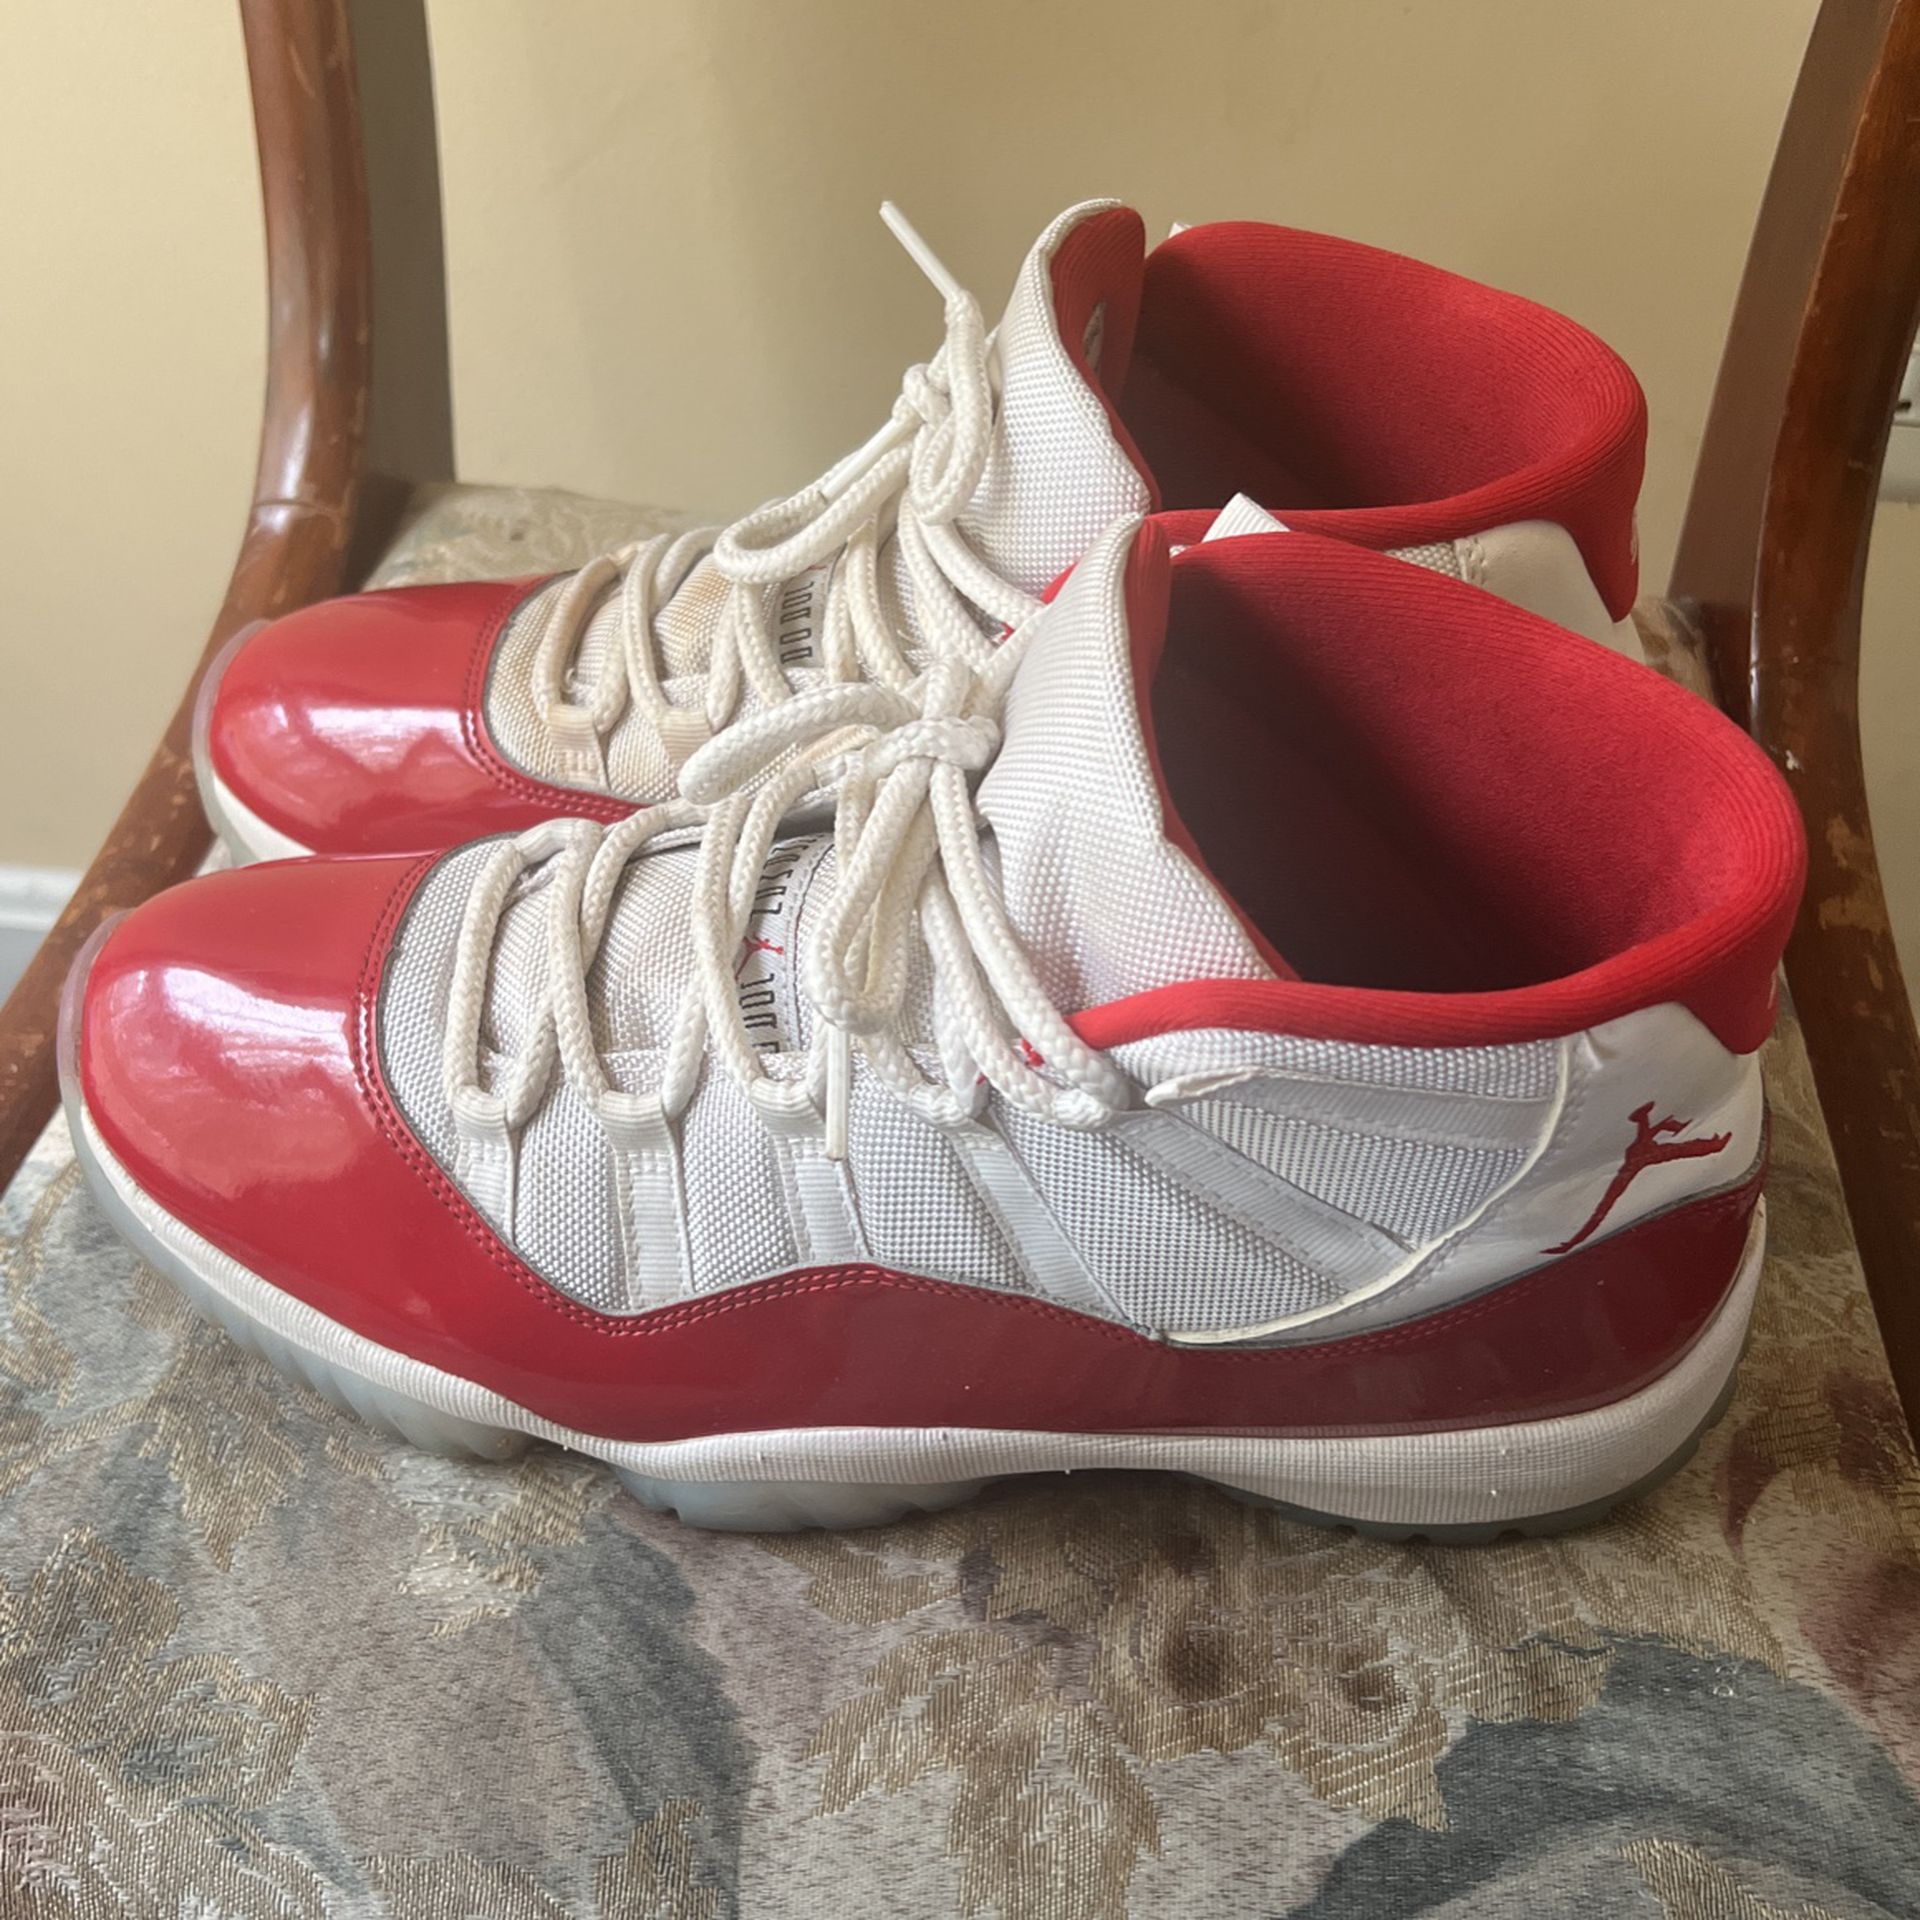 Jordan 11 Cherry Reds Size 11